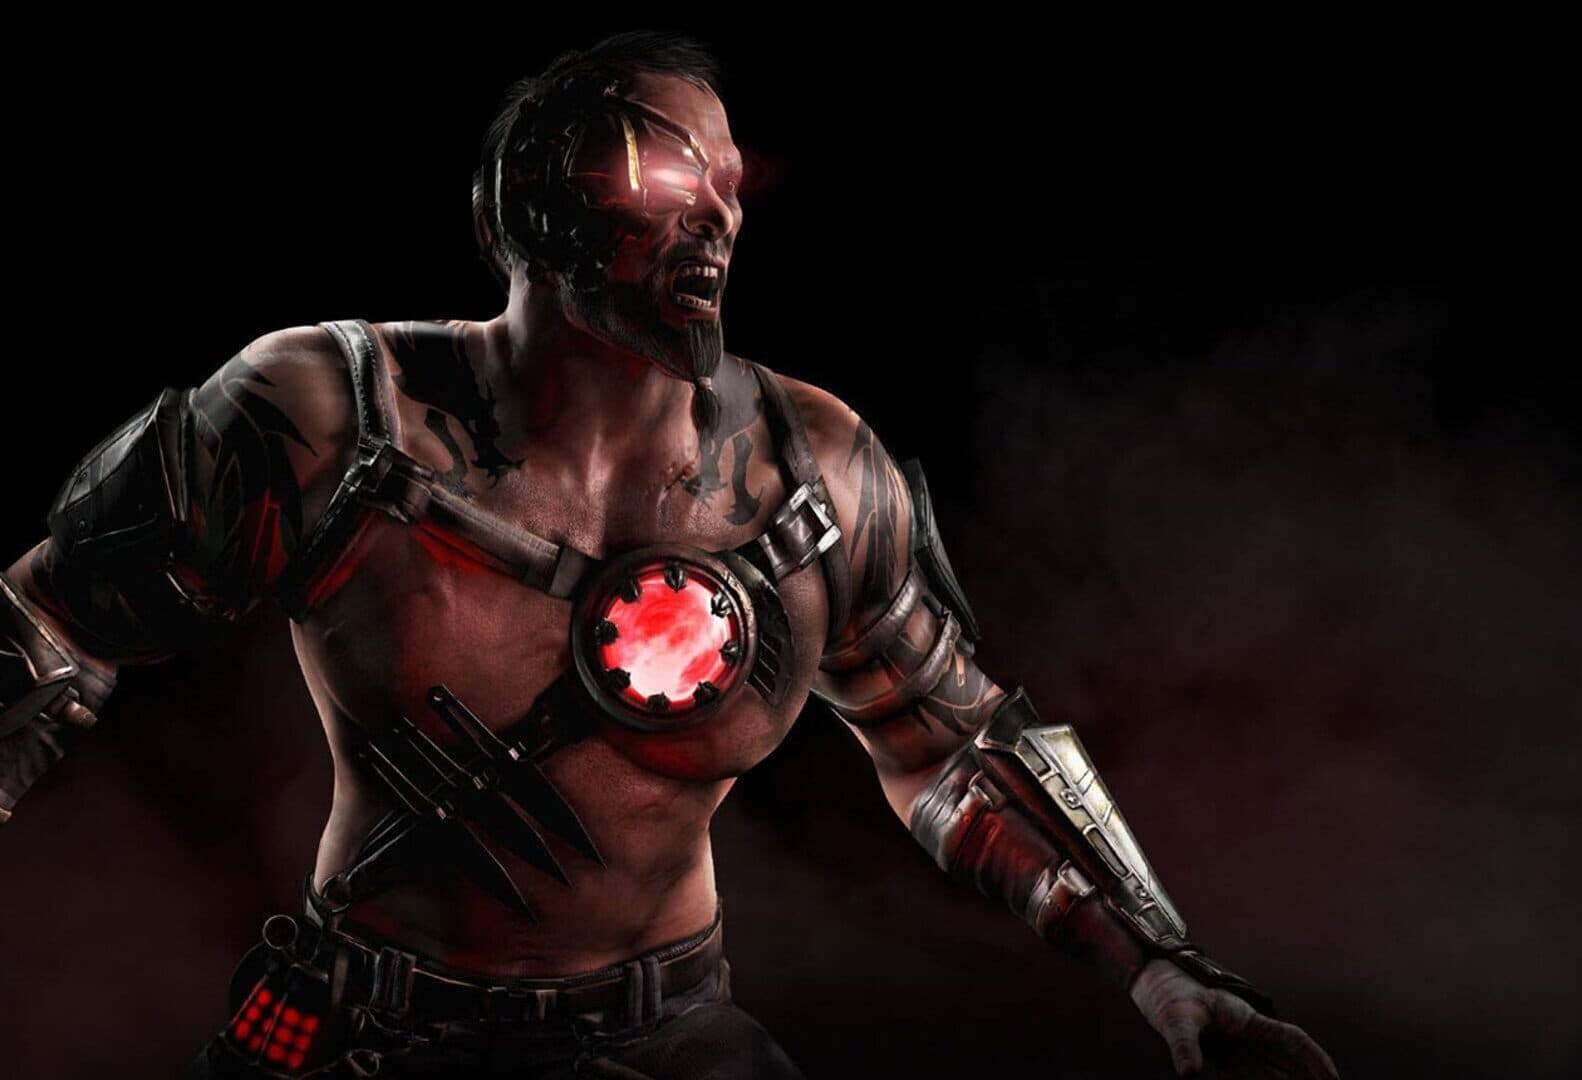 Mortal Kombat X Image